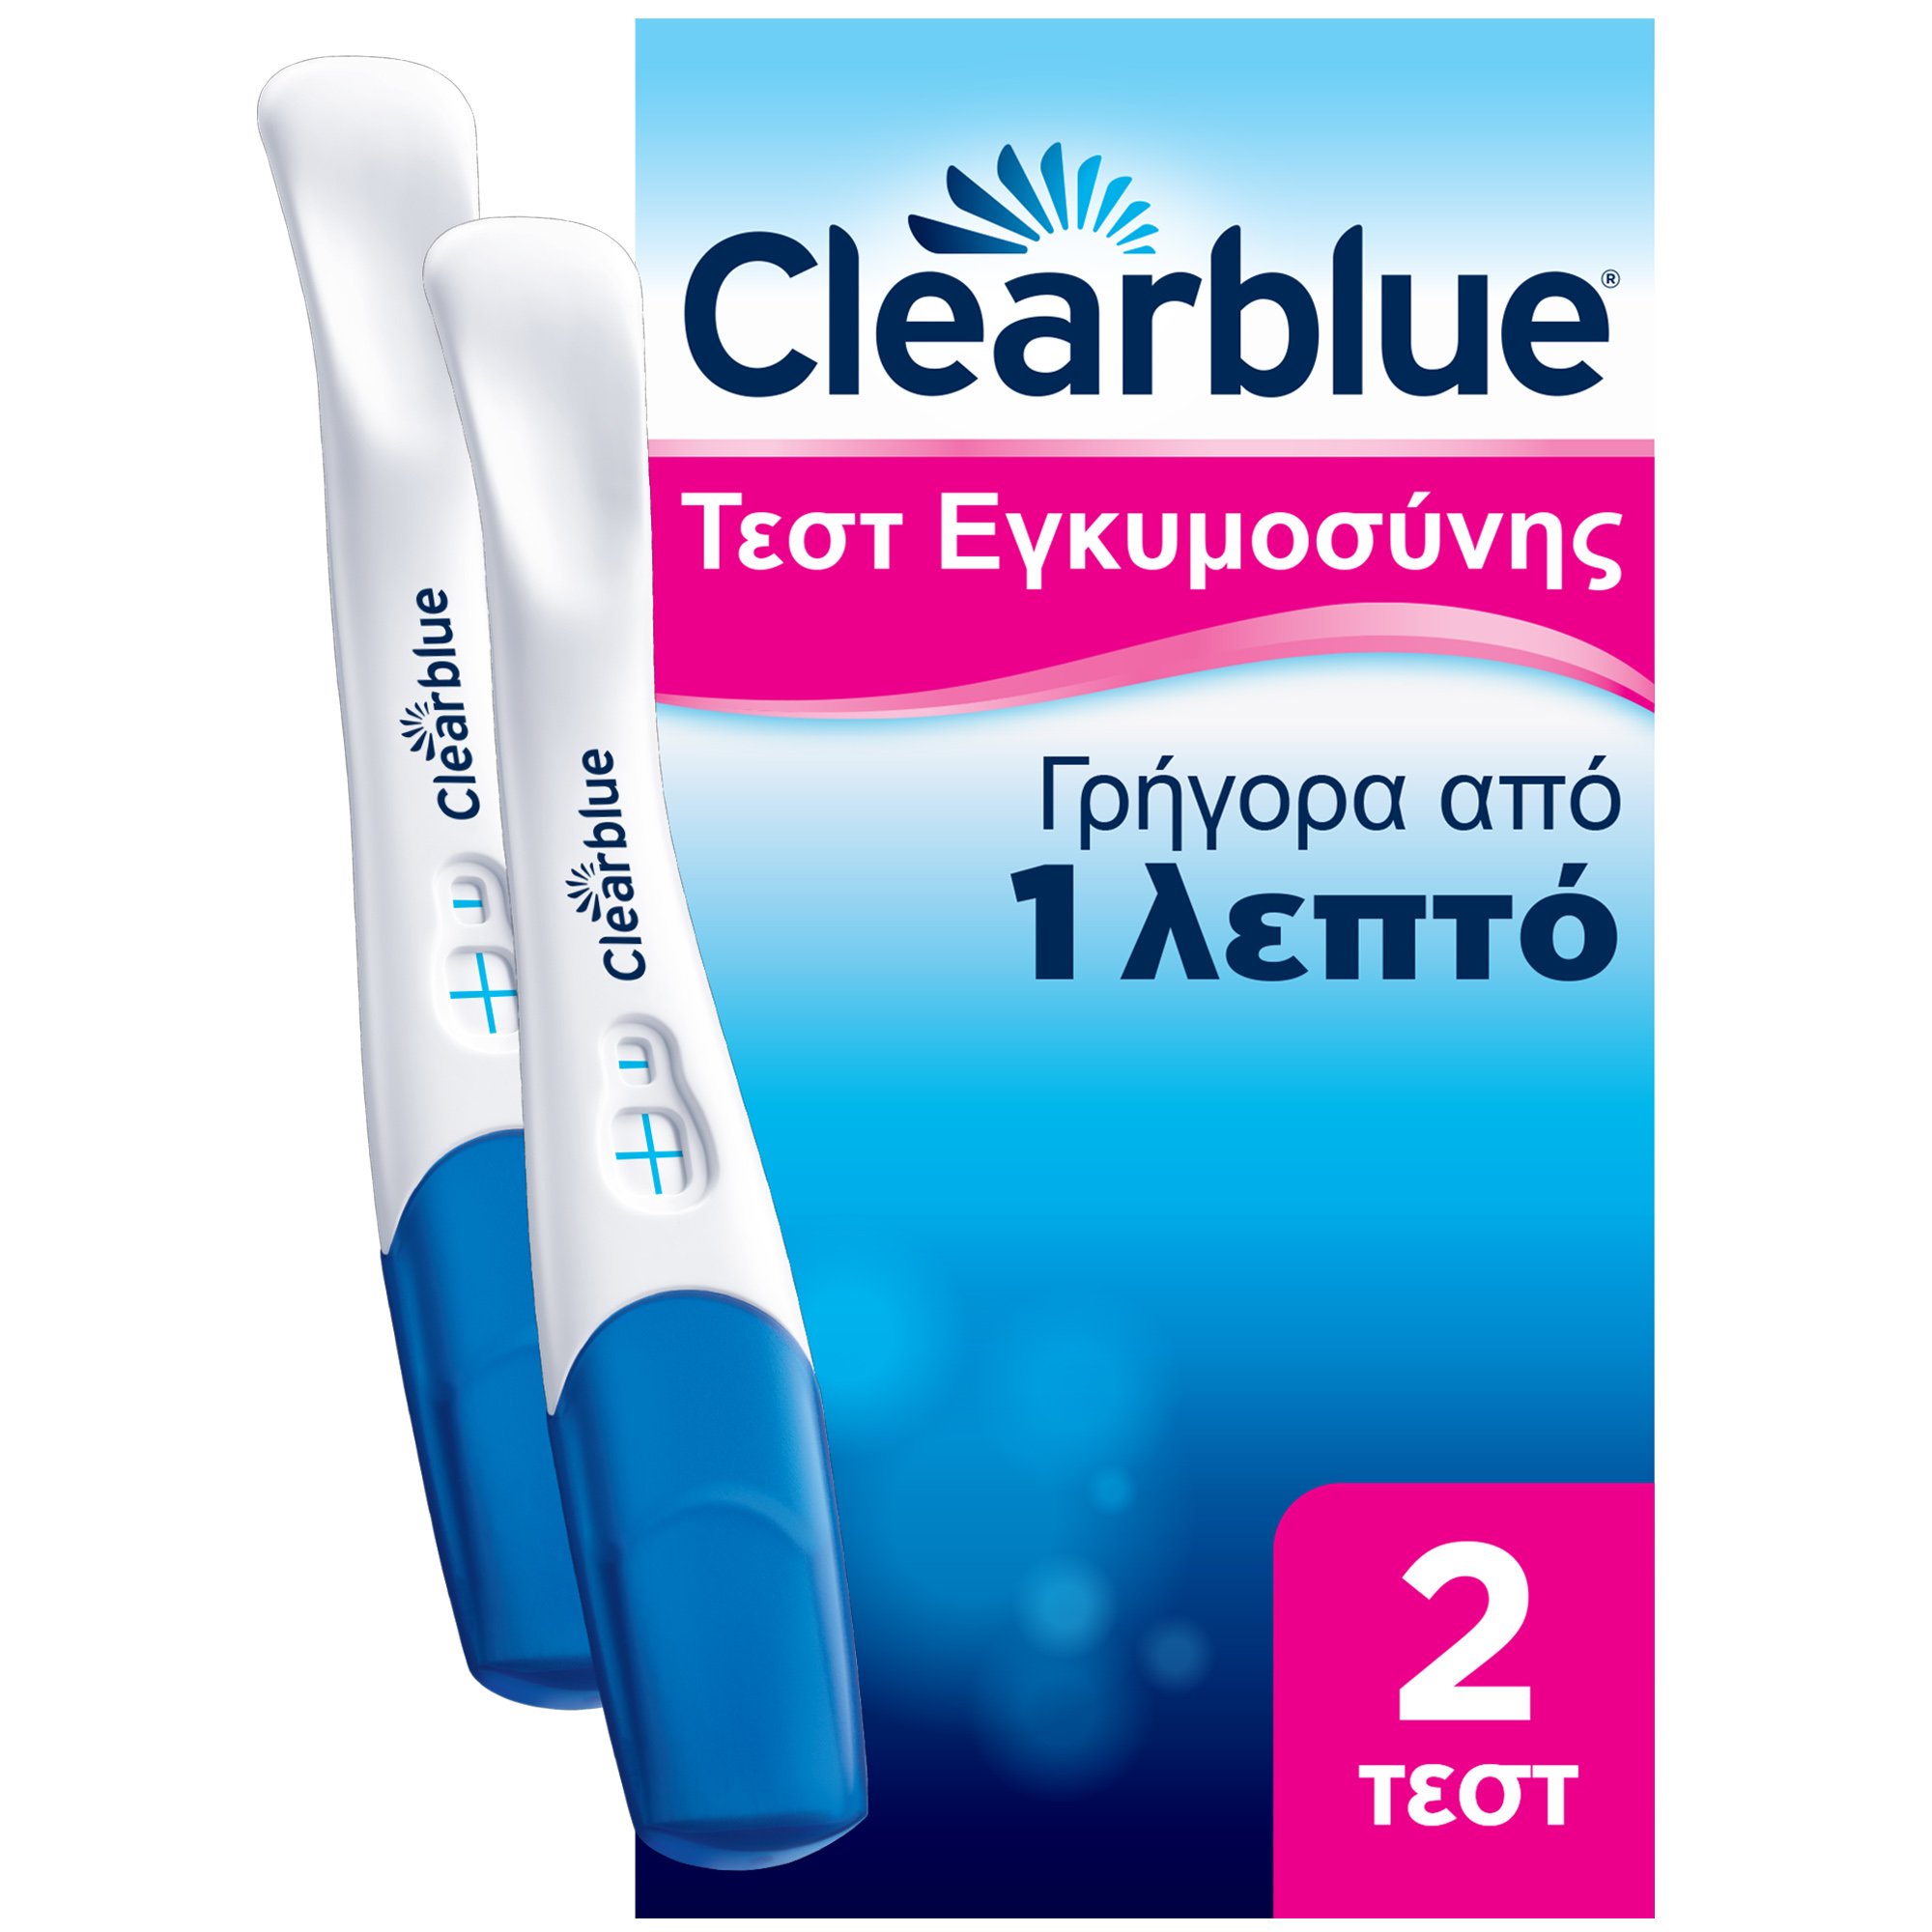 Clearblue Clearblue Τεστ Εγκυμοσύνης με Γρήγορη Ανίχνευση, Αποτέλεσμα Μόλις σε 1 Λεπτό, 2 Τεμάχια